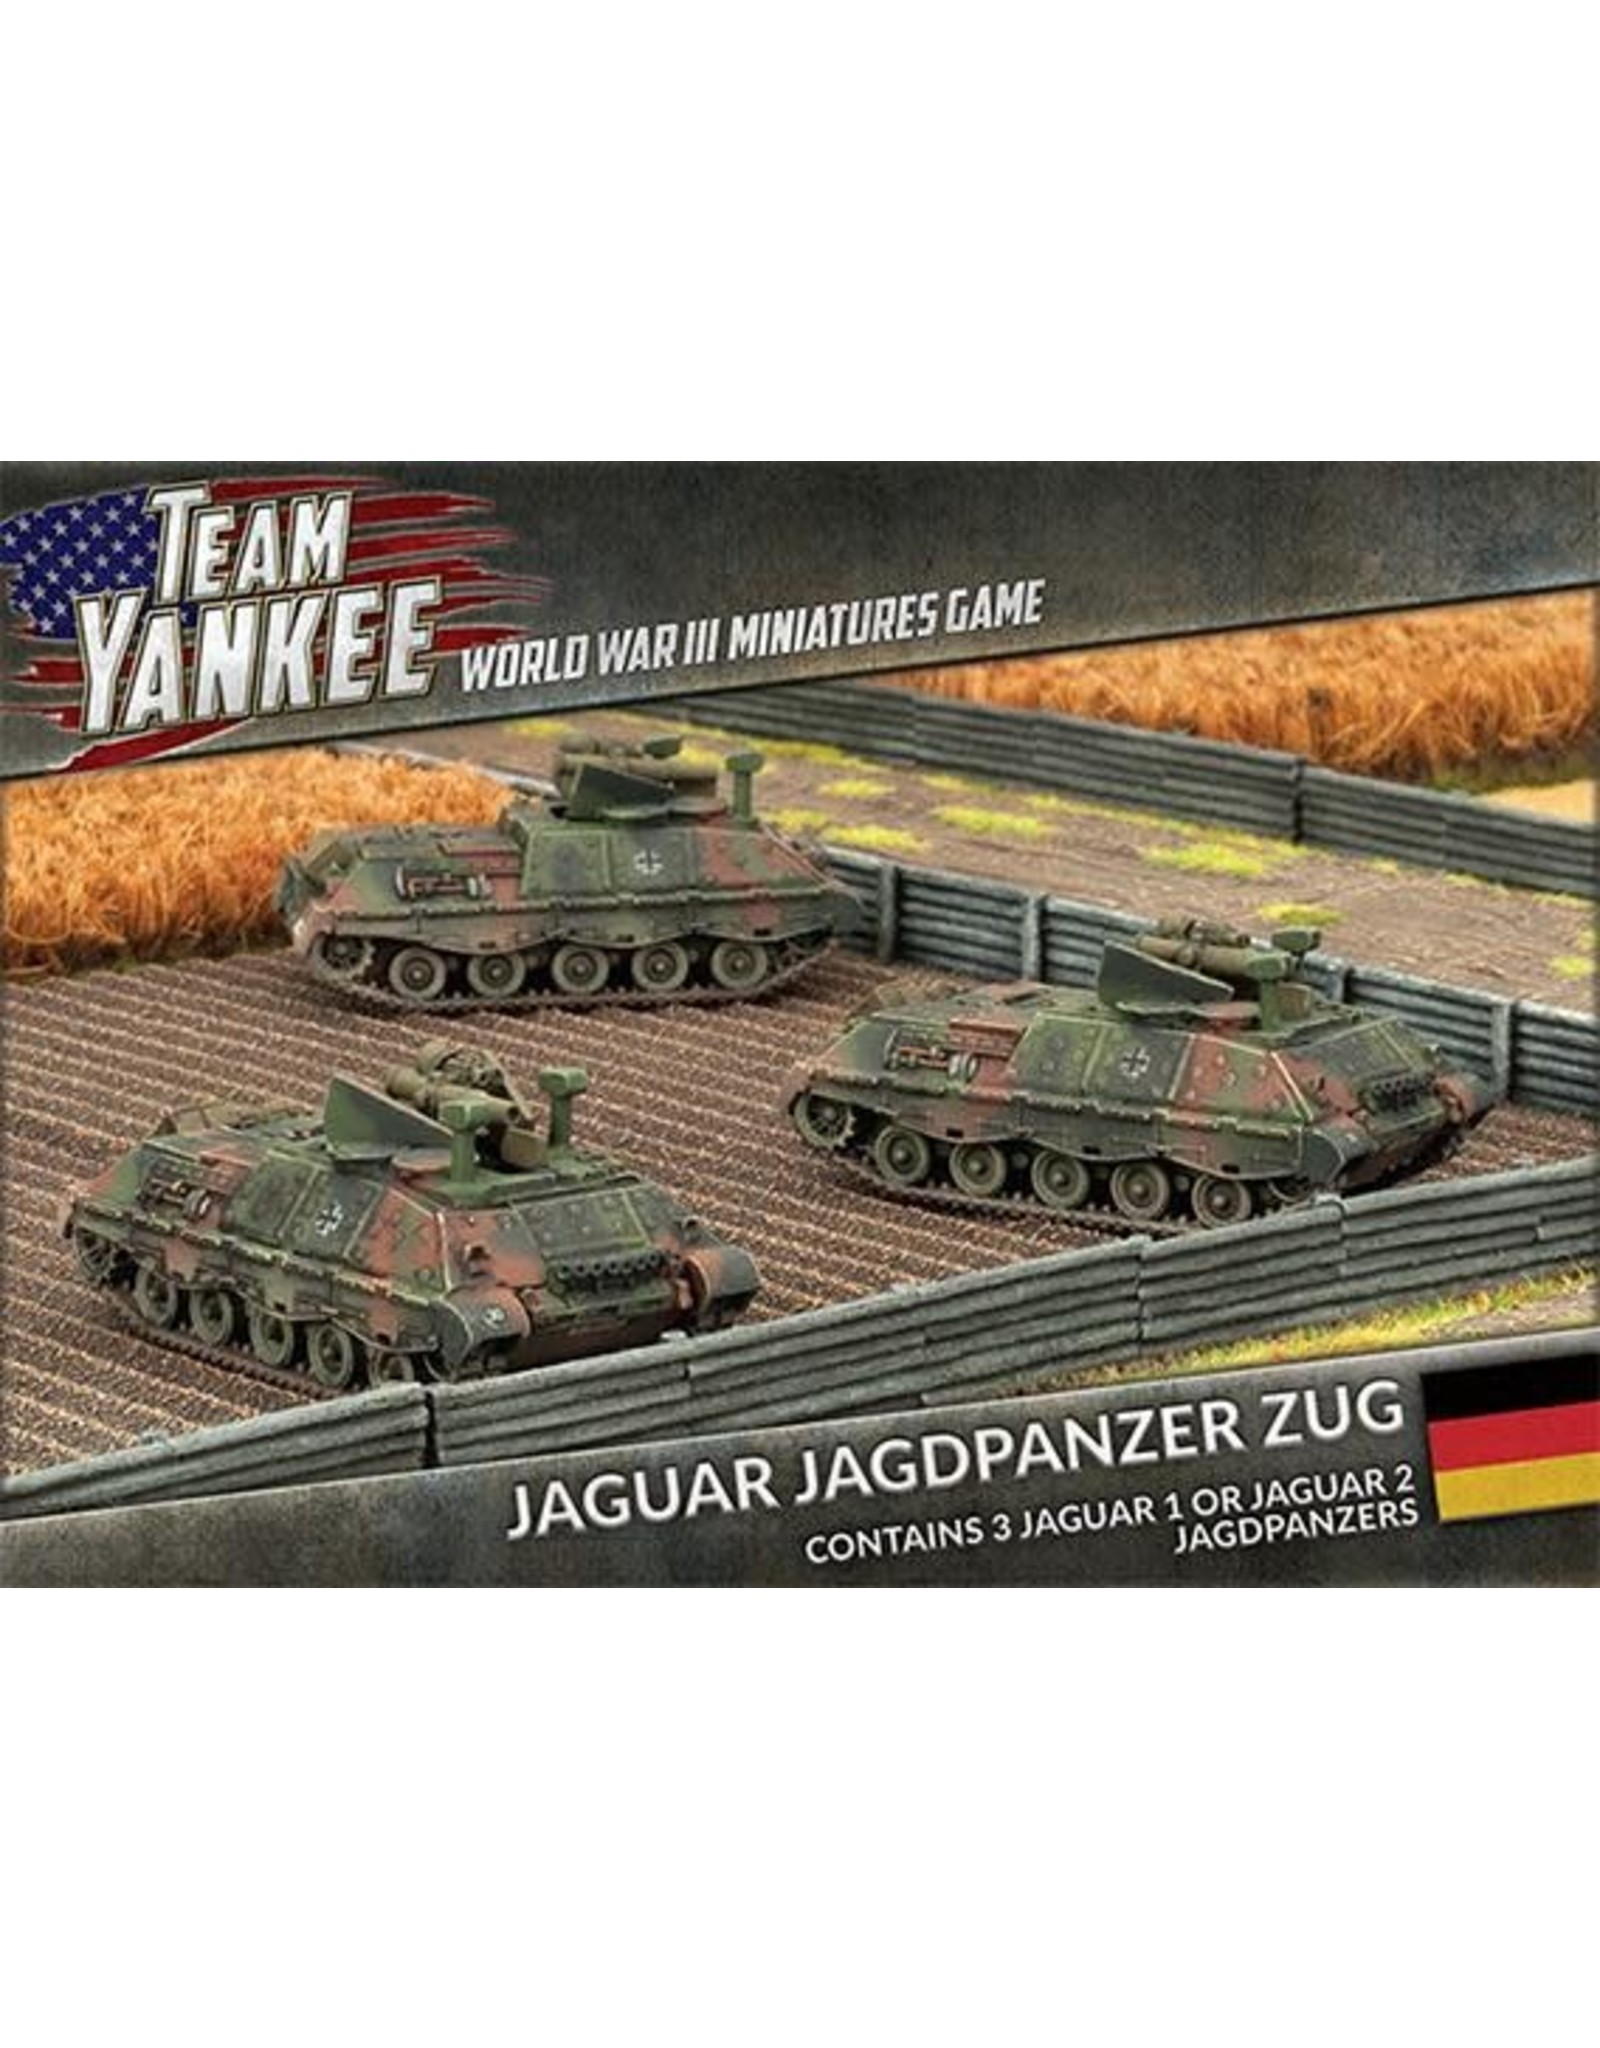 Battlefront Miniatures Team Yankee: Jaguar Jadgpanzer Zug